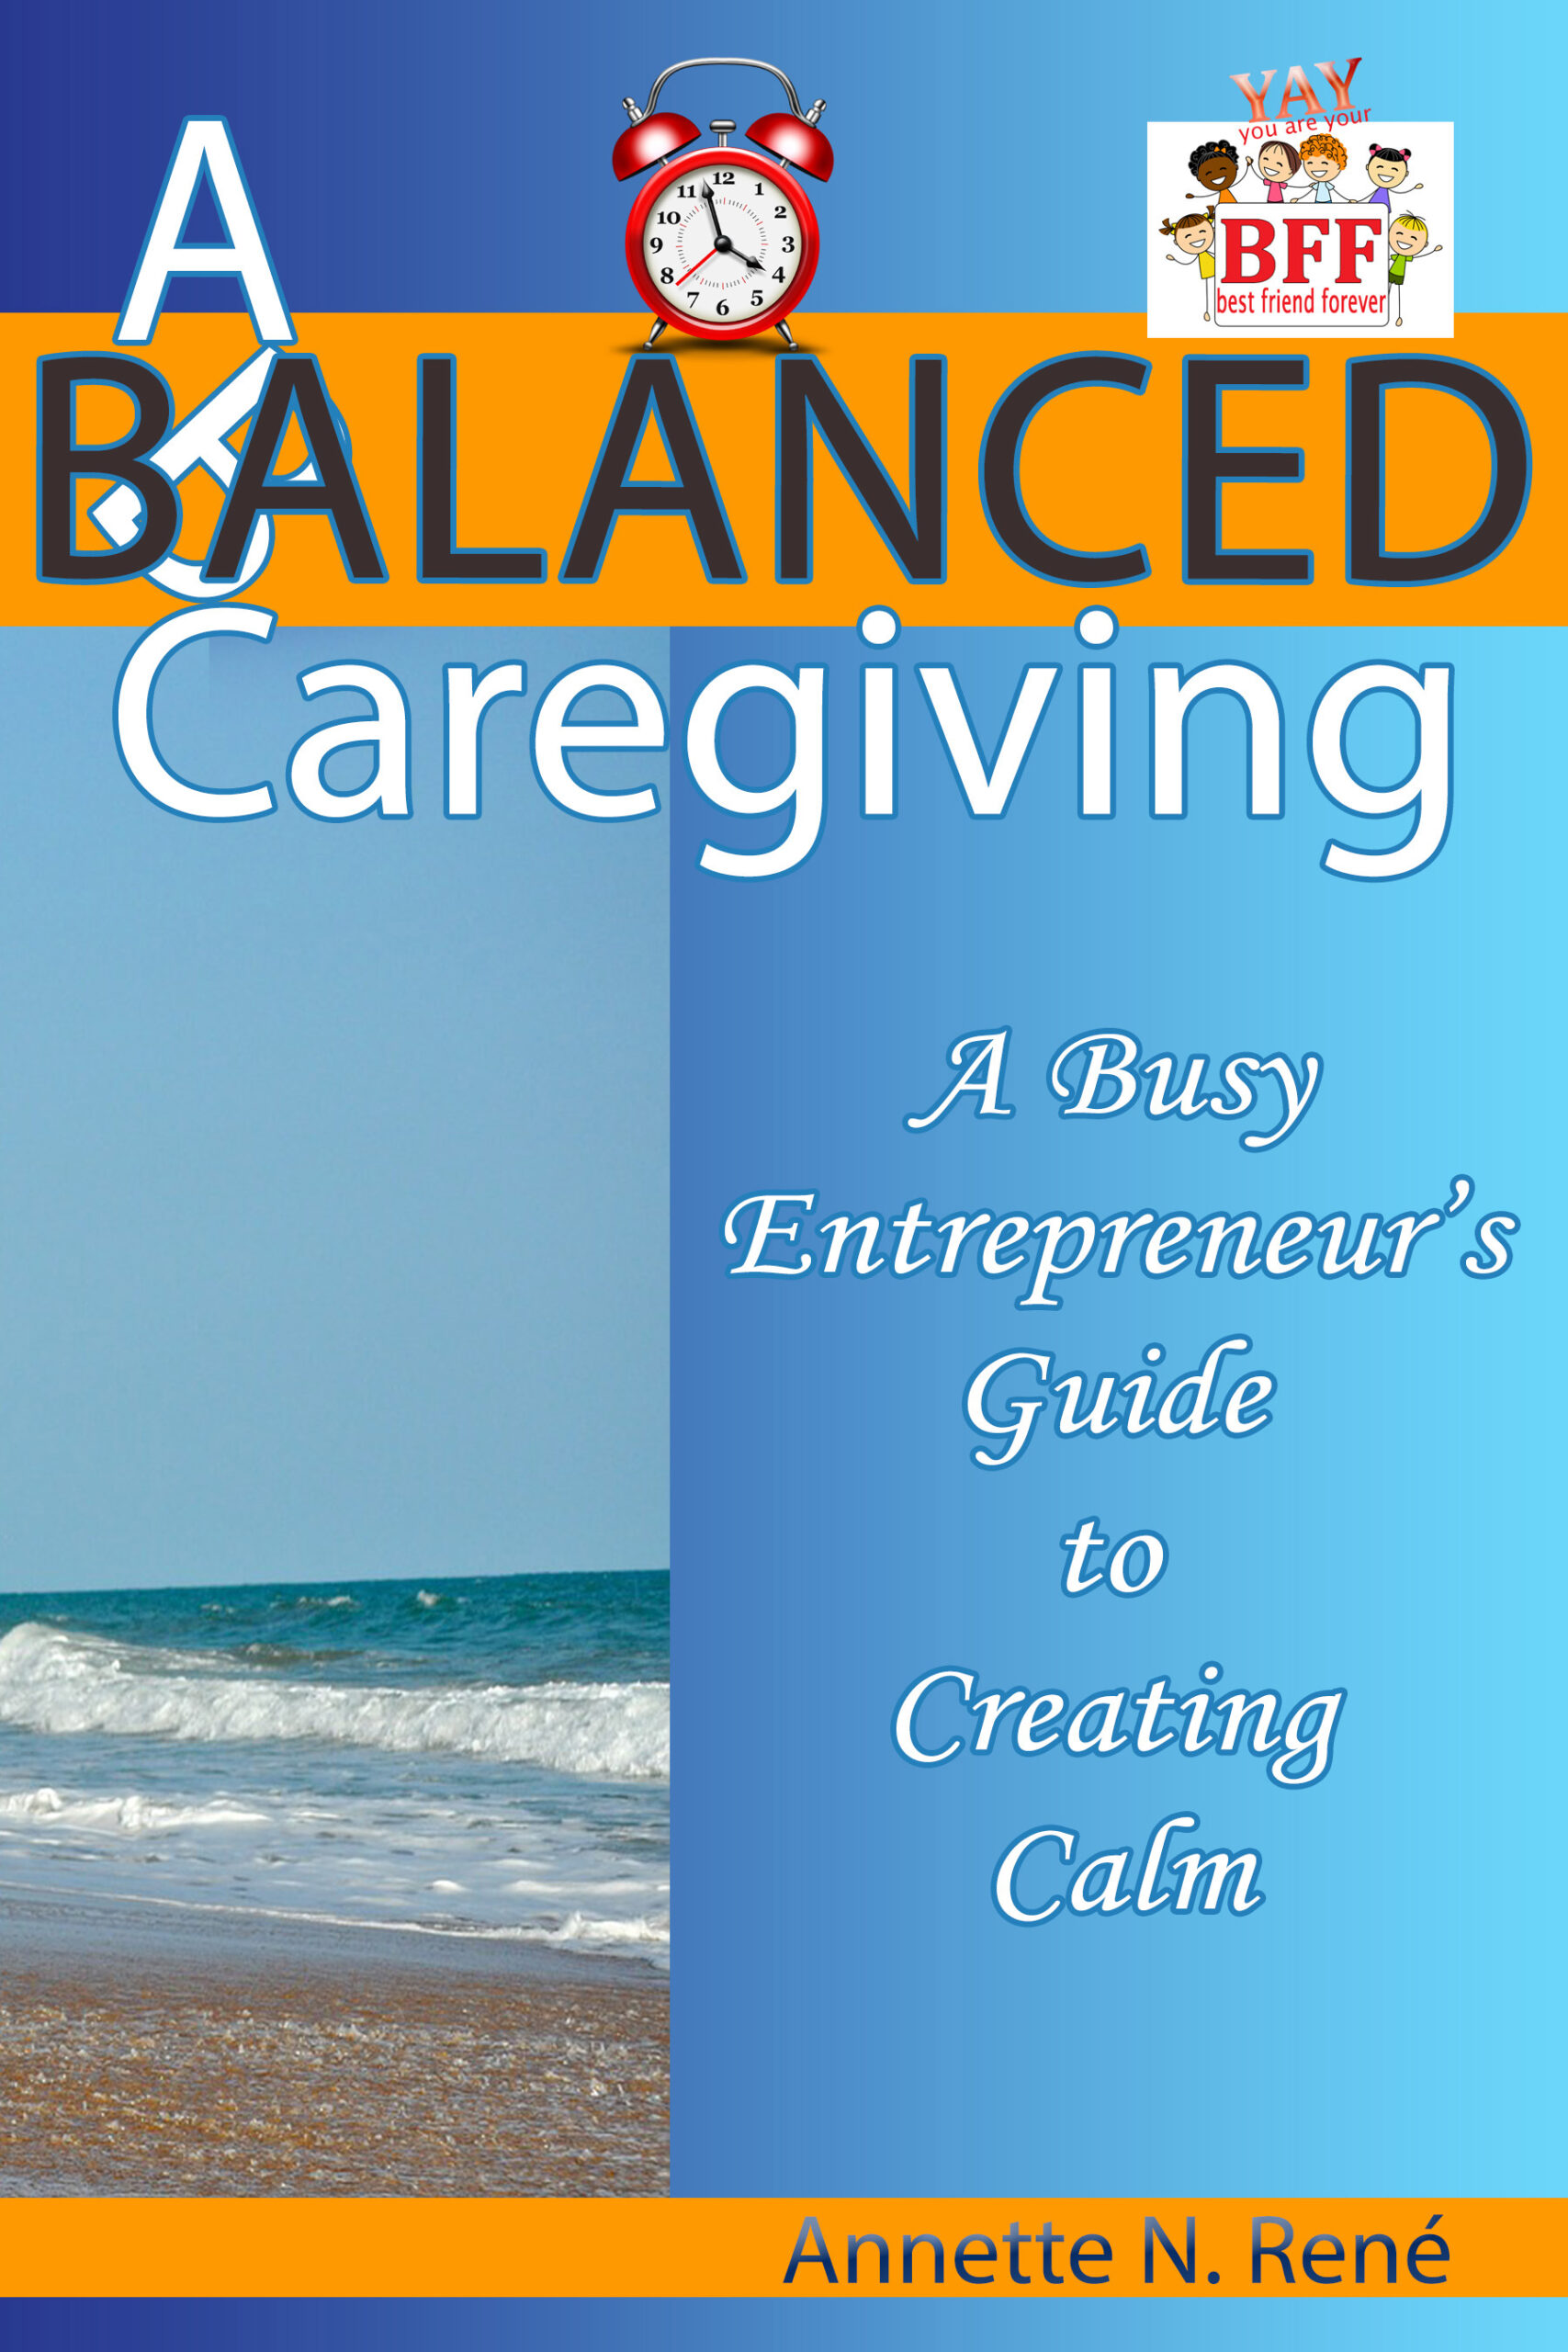 YAY BFF! A Balanced Caregiving cover